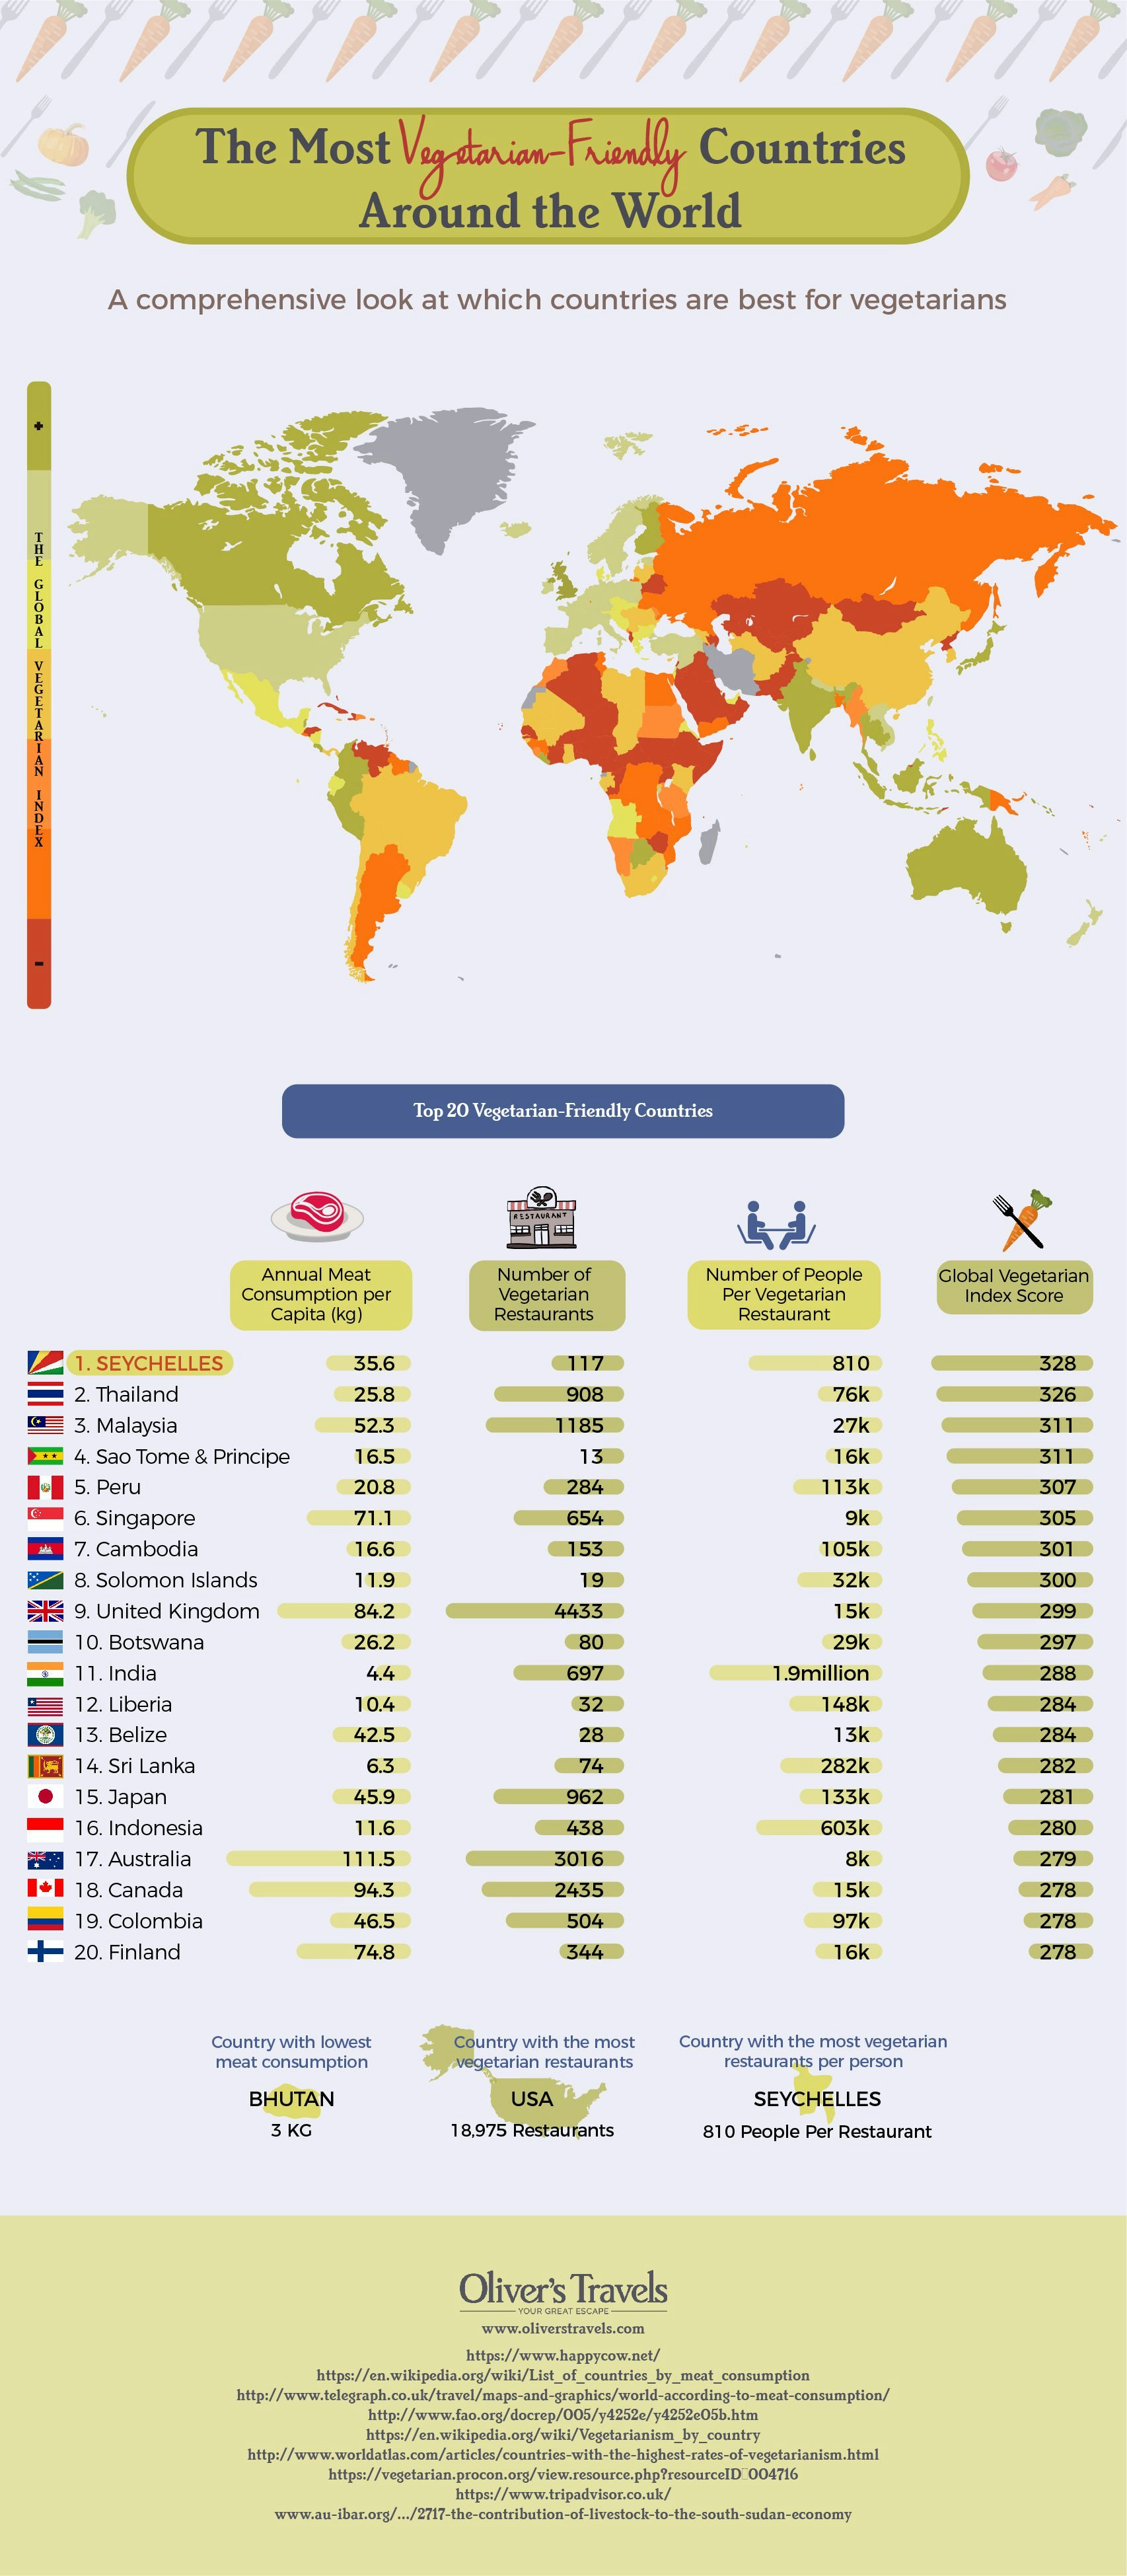 Global Vegetarian Index